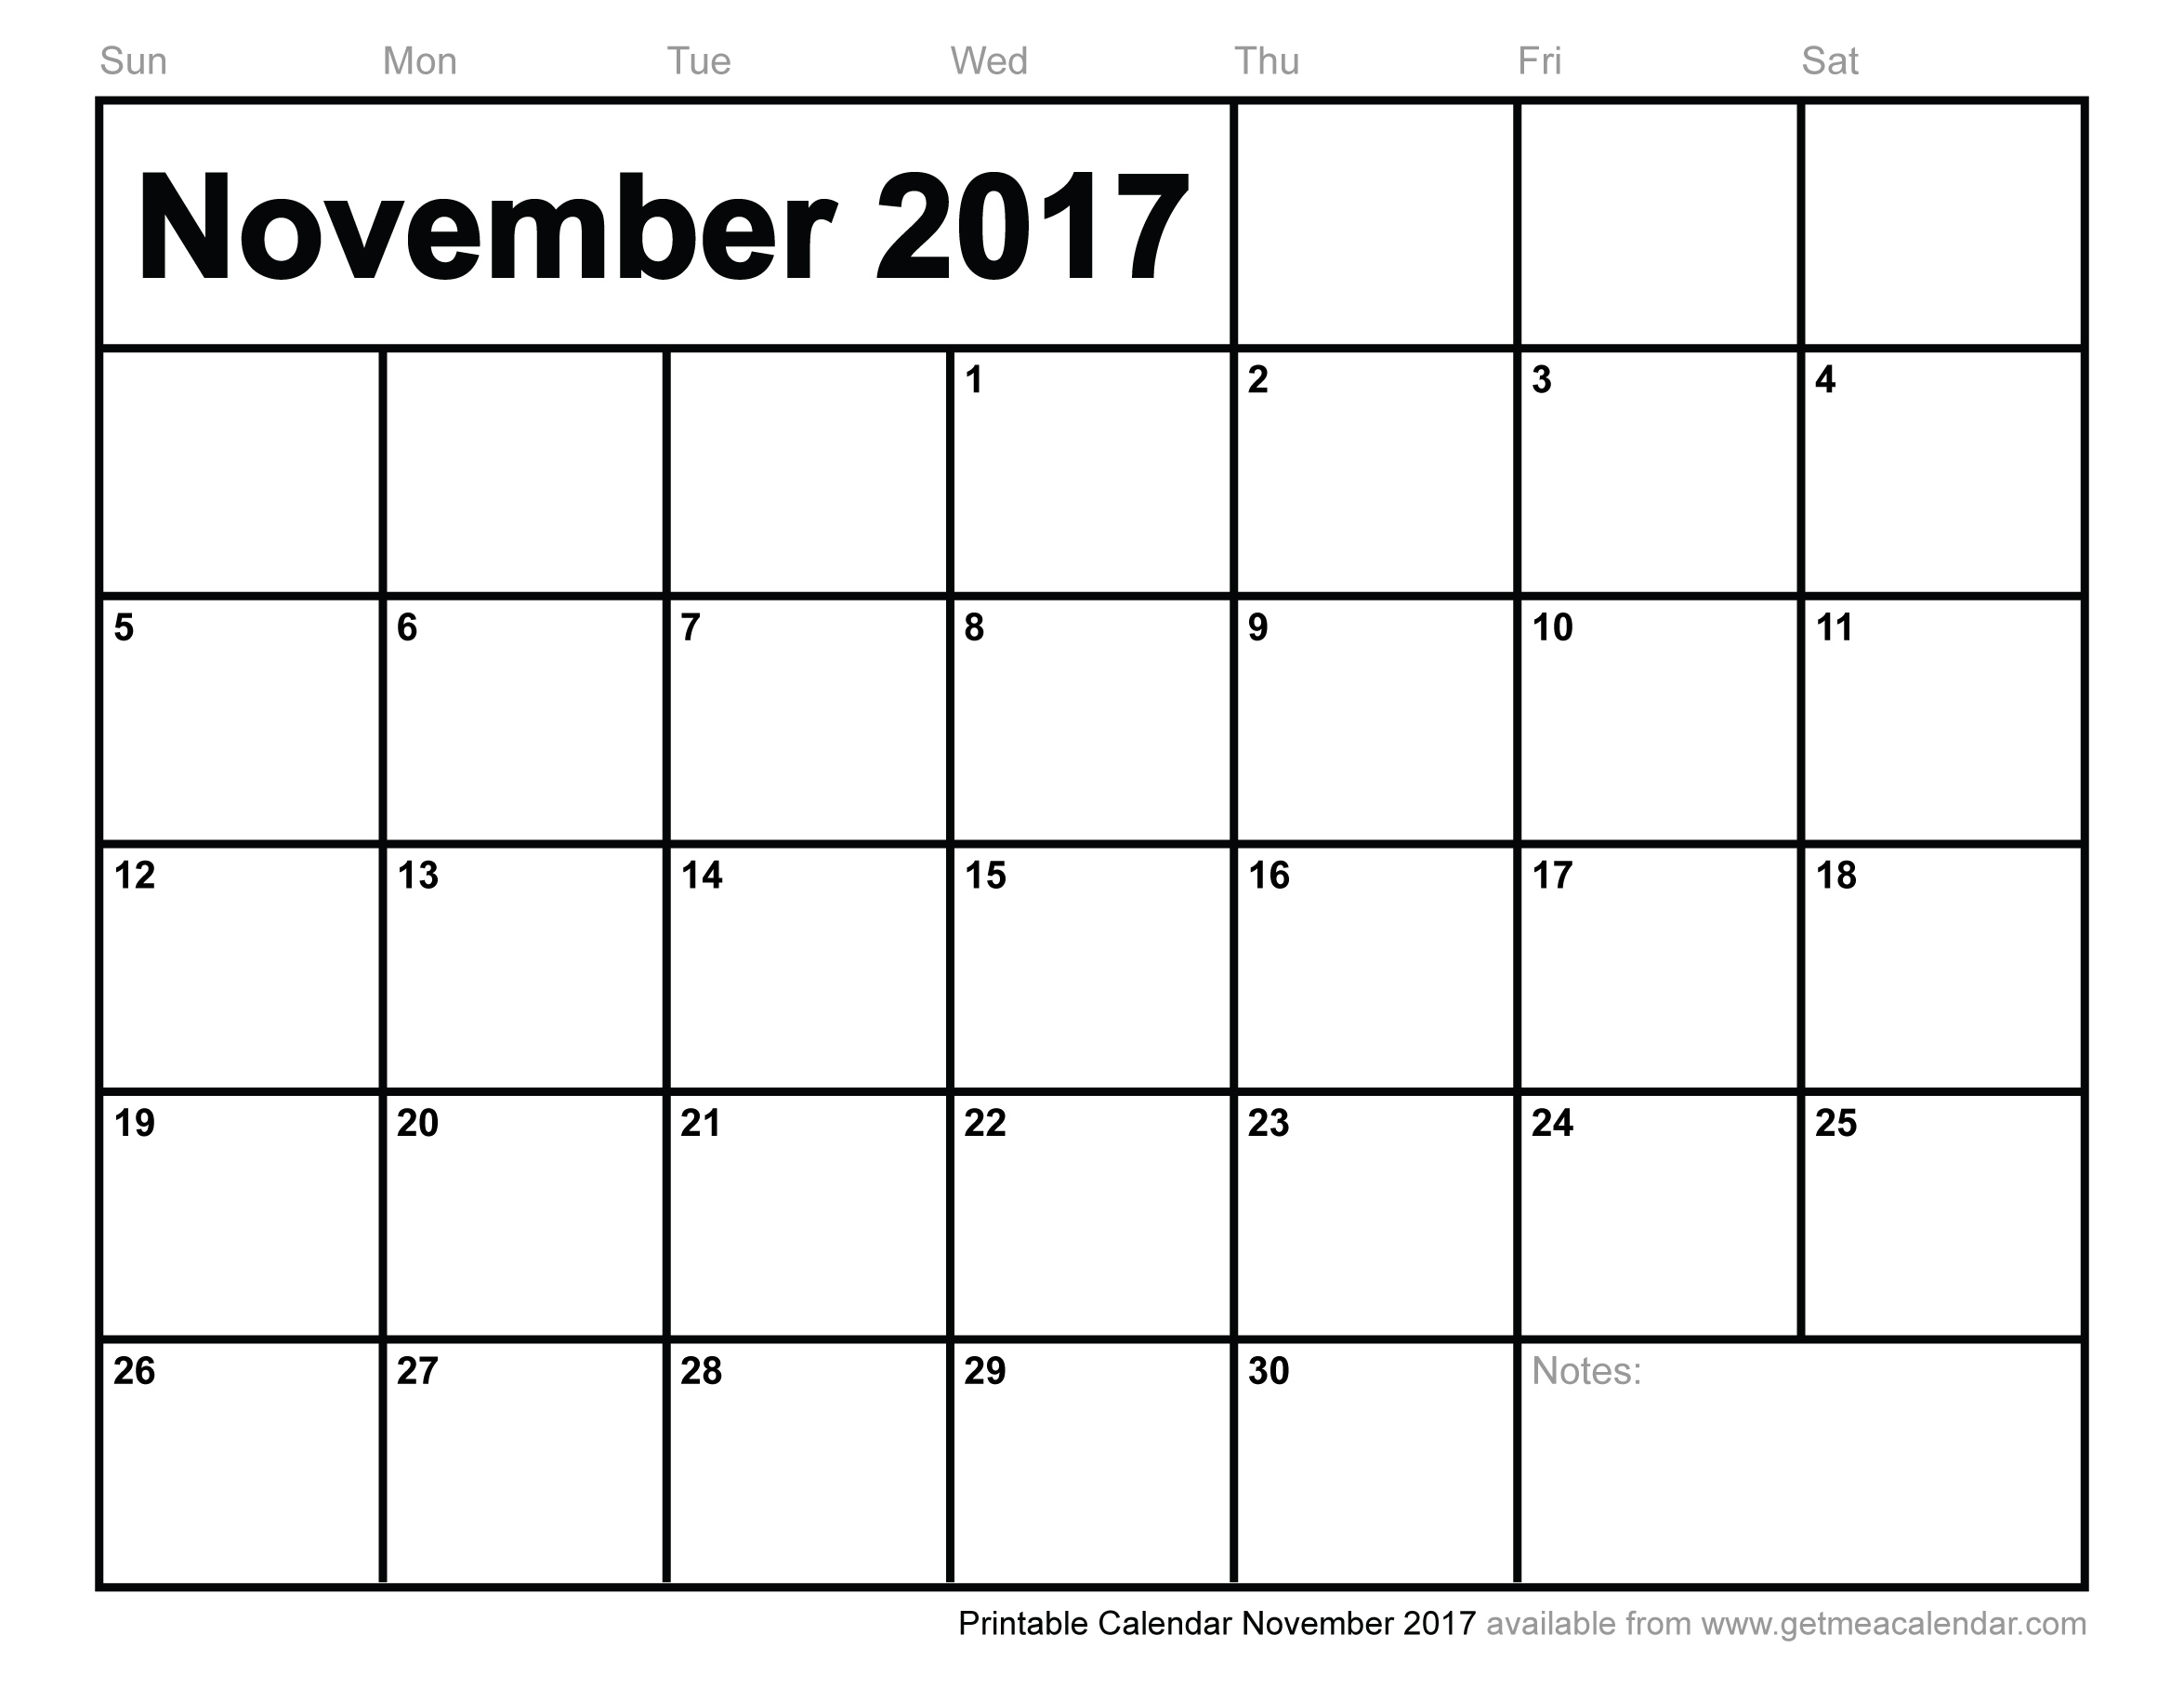 Samples Of November 2017 Calendar Template Excel Throughout November 2017 Calendar Template Excel For Google Spreadsheet